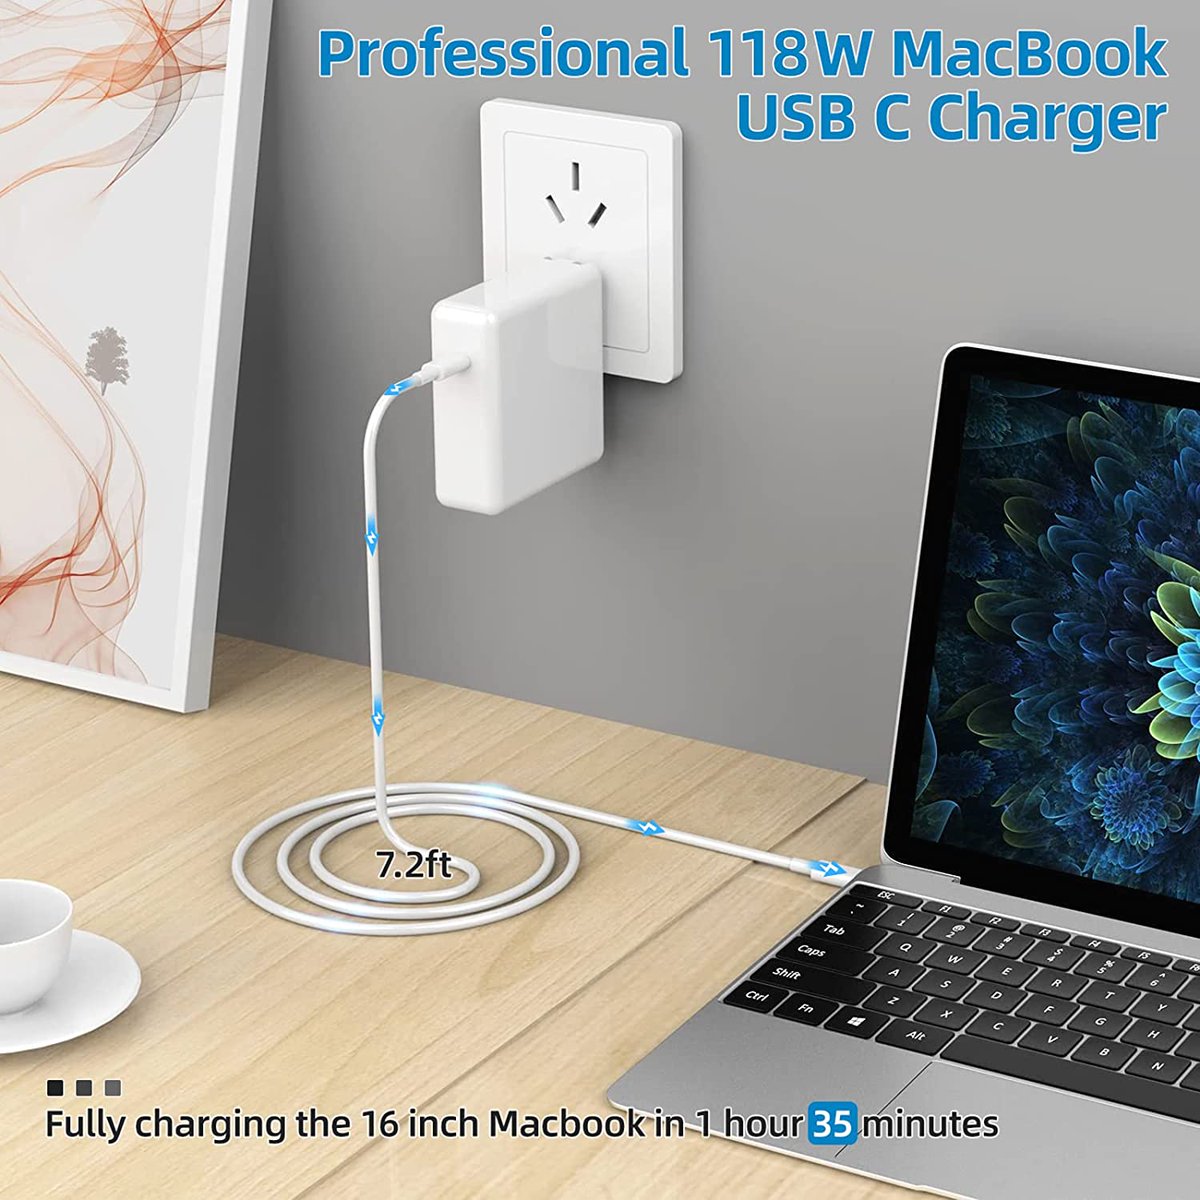 Mac Book Pro Charger - 118W USB C Power Adapter
bit.ly/42ghEm8

#MacBookProCharger #USBCCPowerAdapter #FastCharging #Furgor #MacBookPro #MacBookAir #iPadPro #USBCTechnology #ConvenientCharging #AffiliateMarketing #TechAccessories